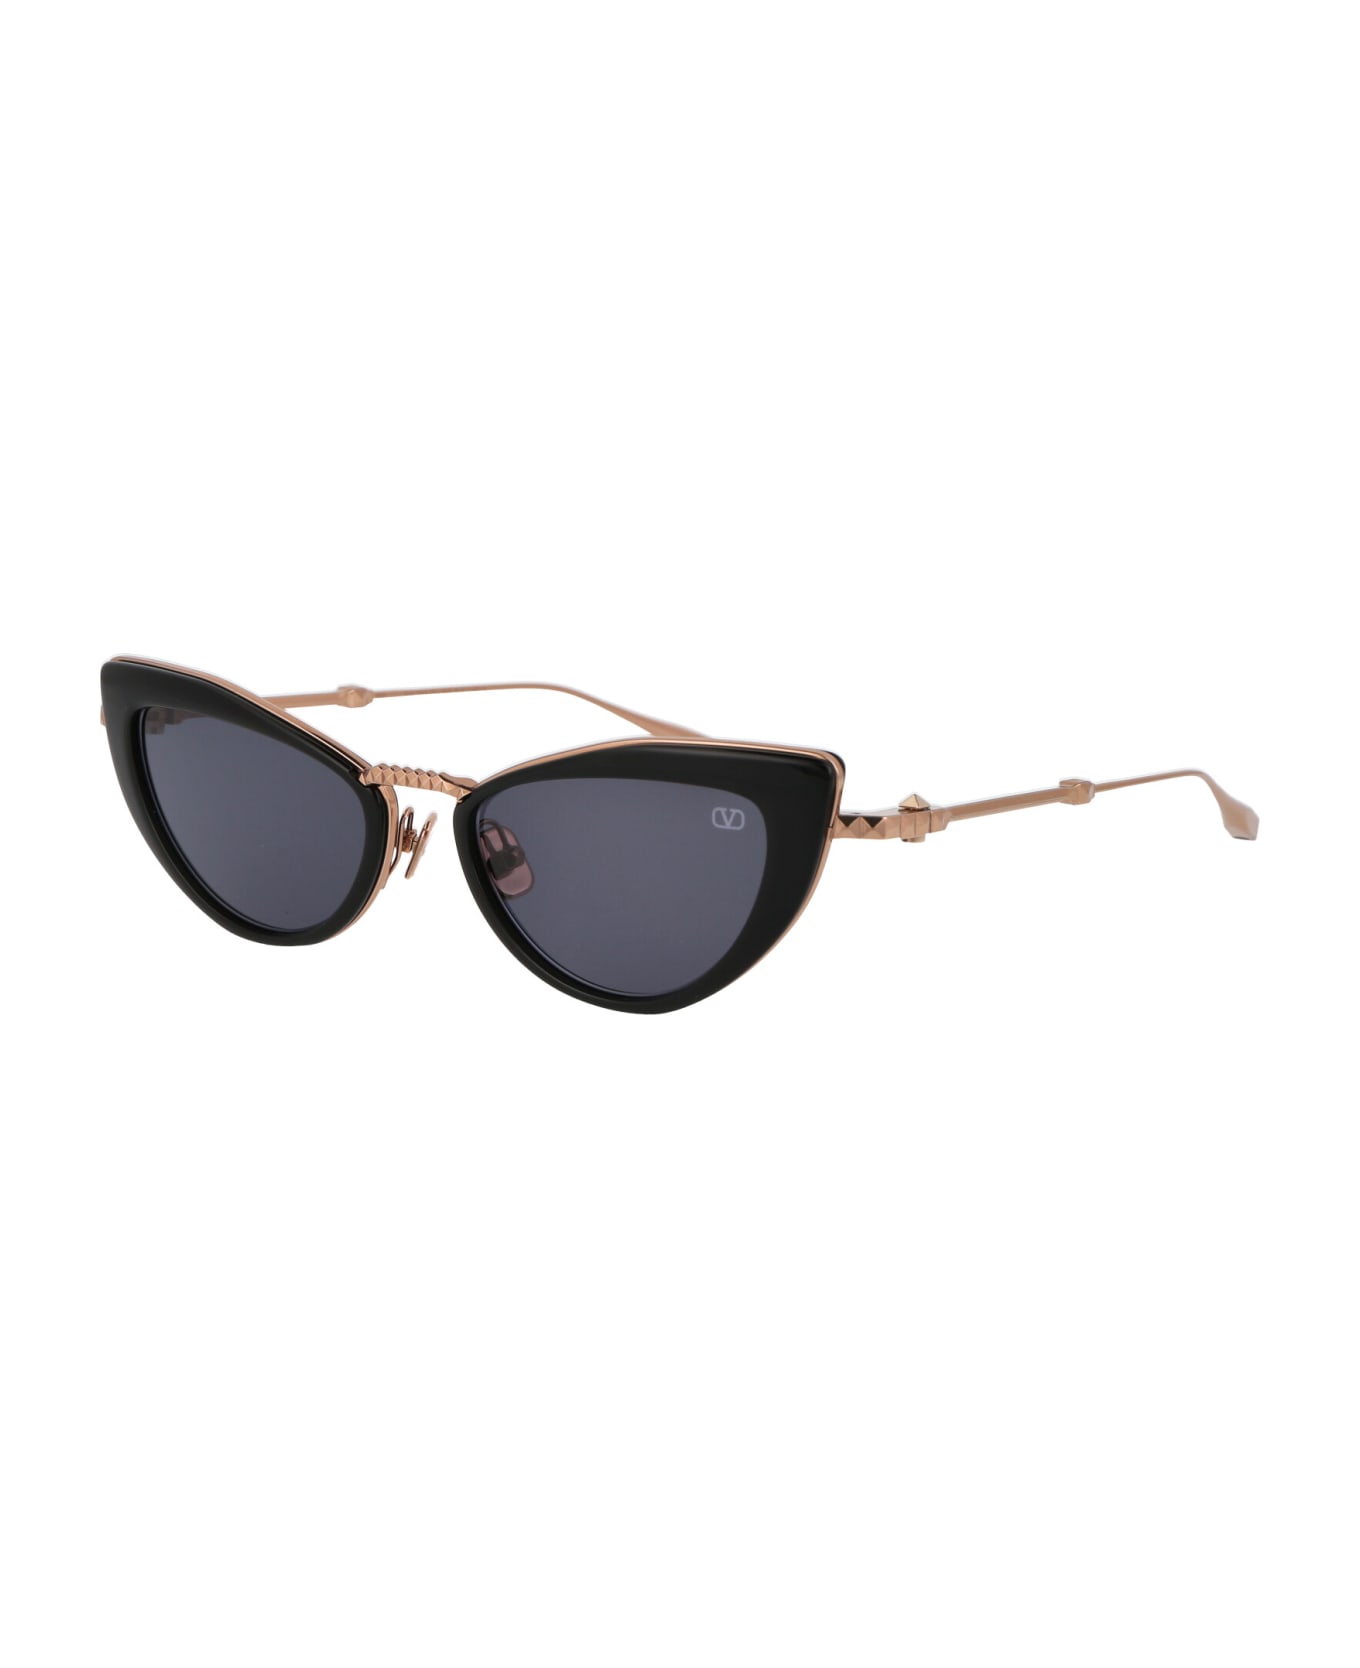 Valentino Eyewear Viii Sunglasses - ROSE GOLD W/ DARK GREY 